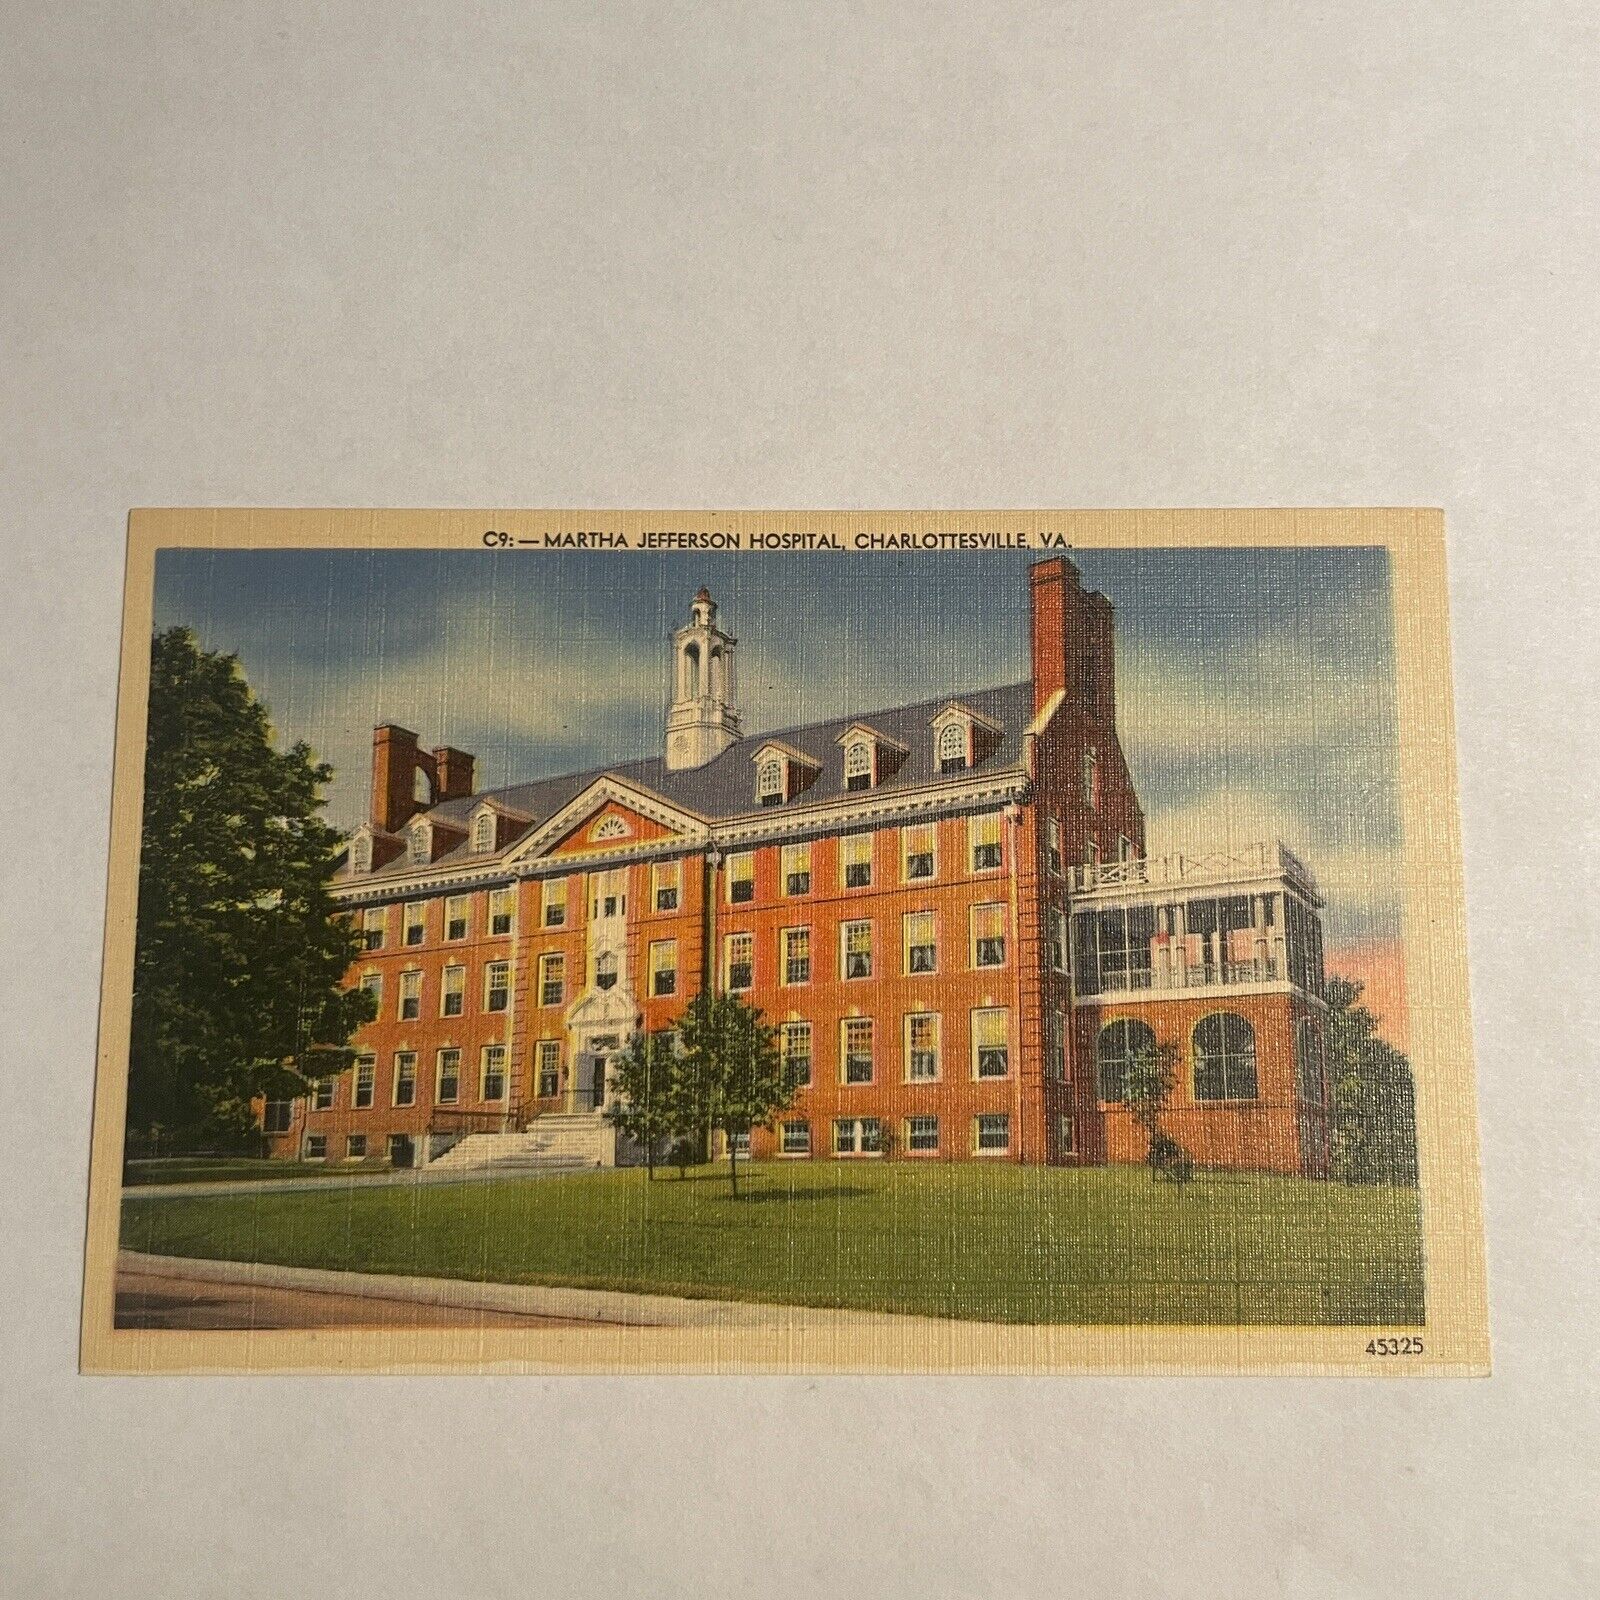 Charlottesville VA-Virginia, Martha Jefferson Hospital, Vintage Postcard